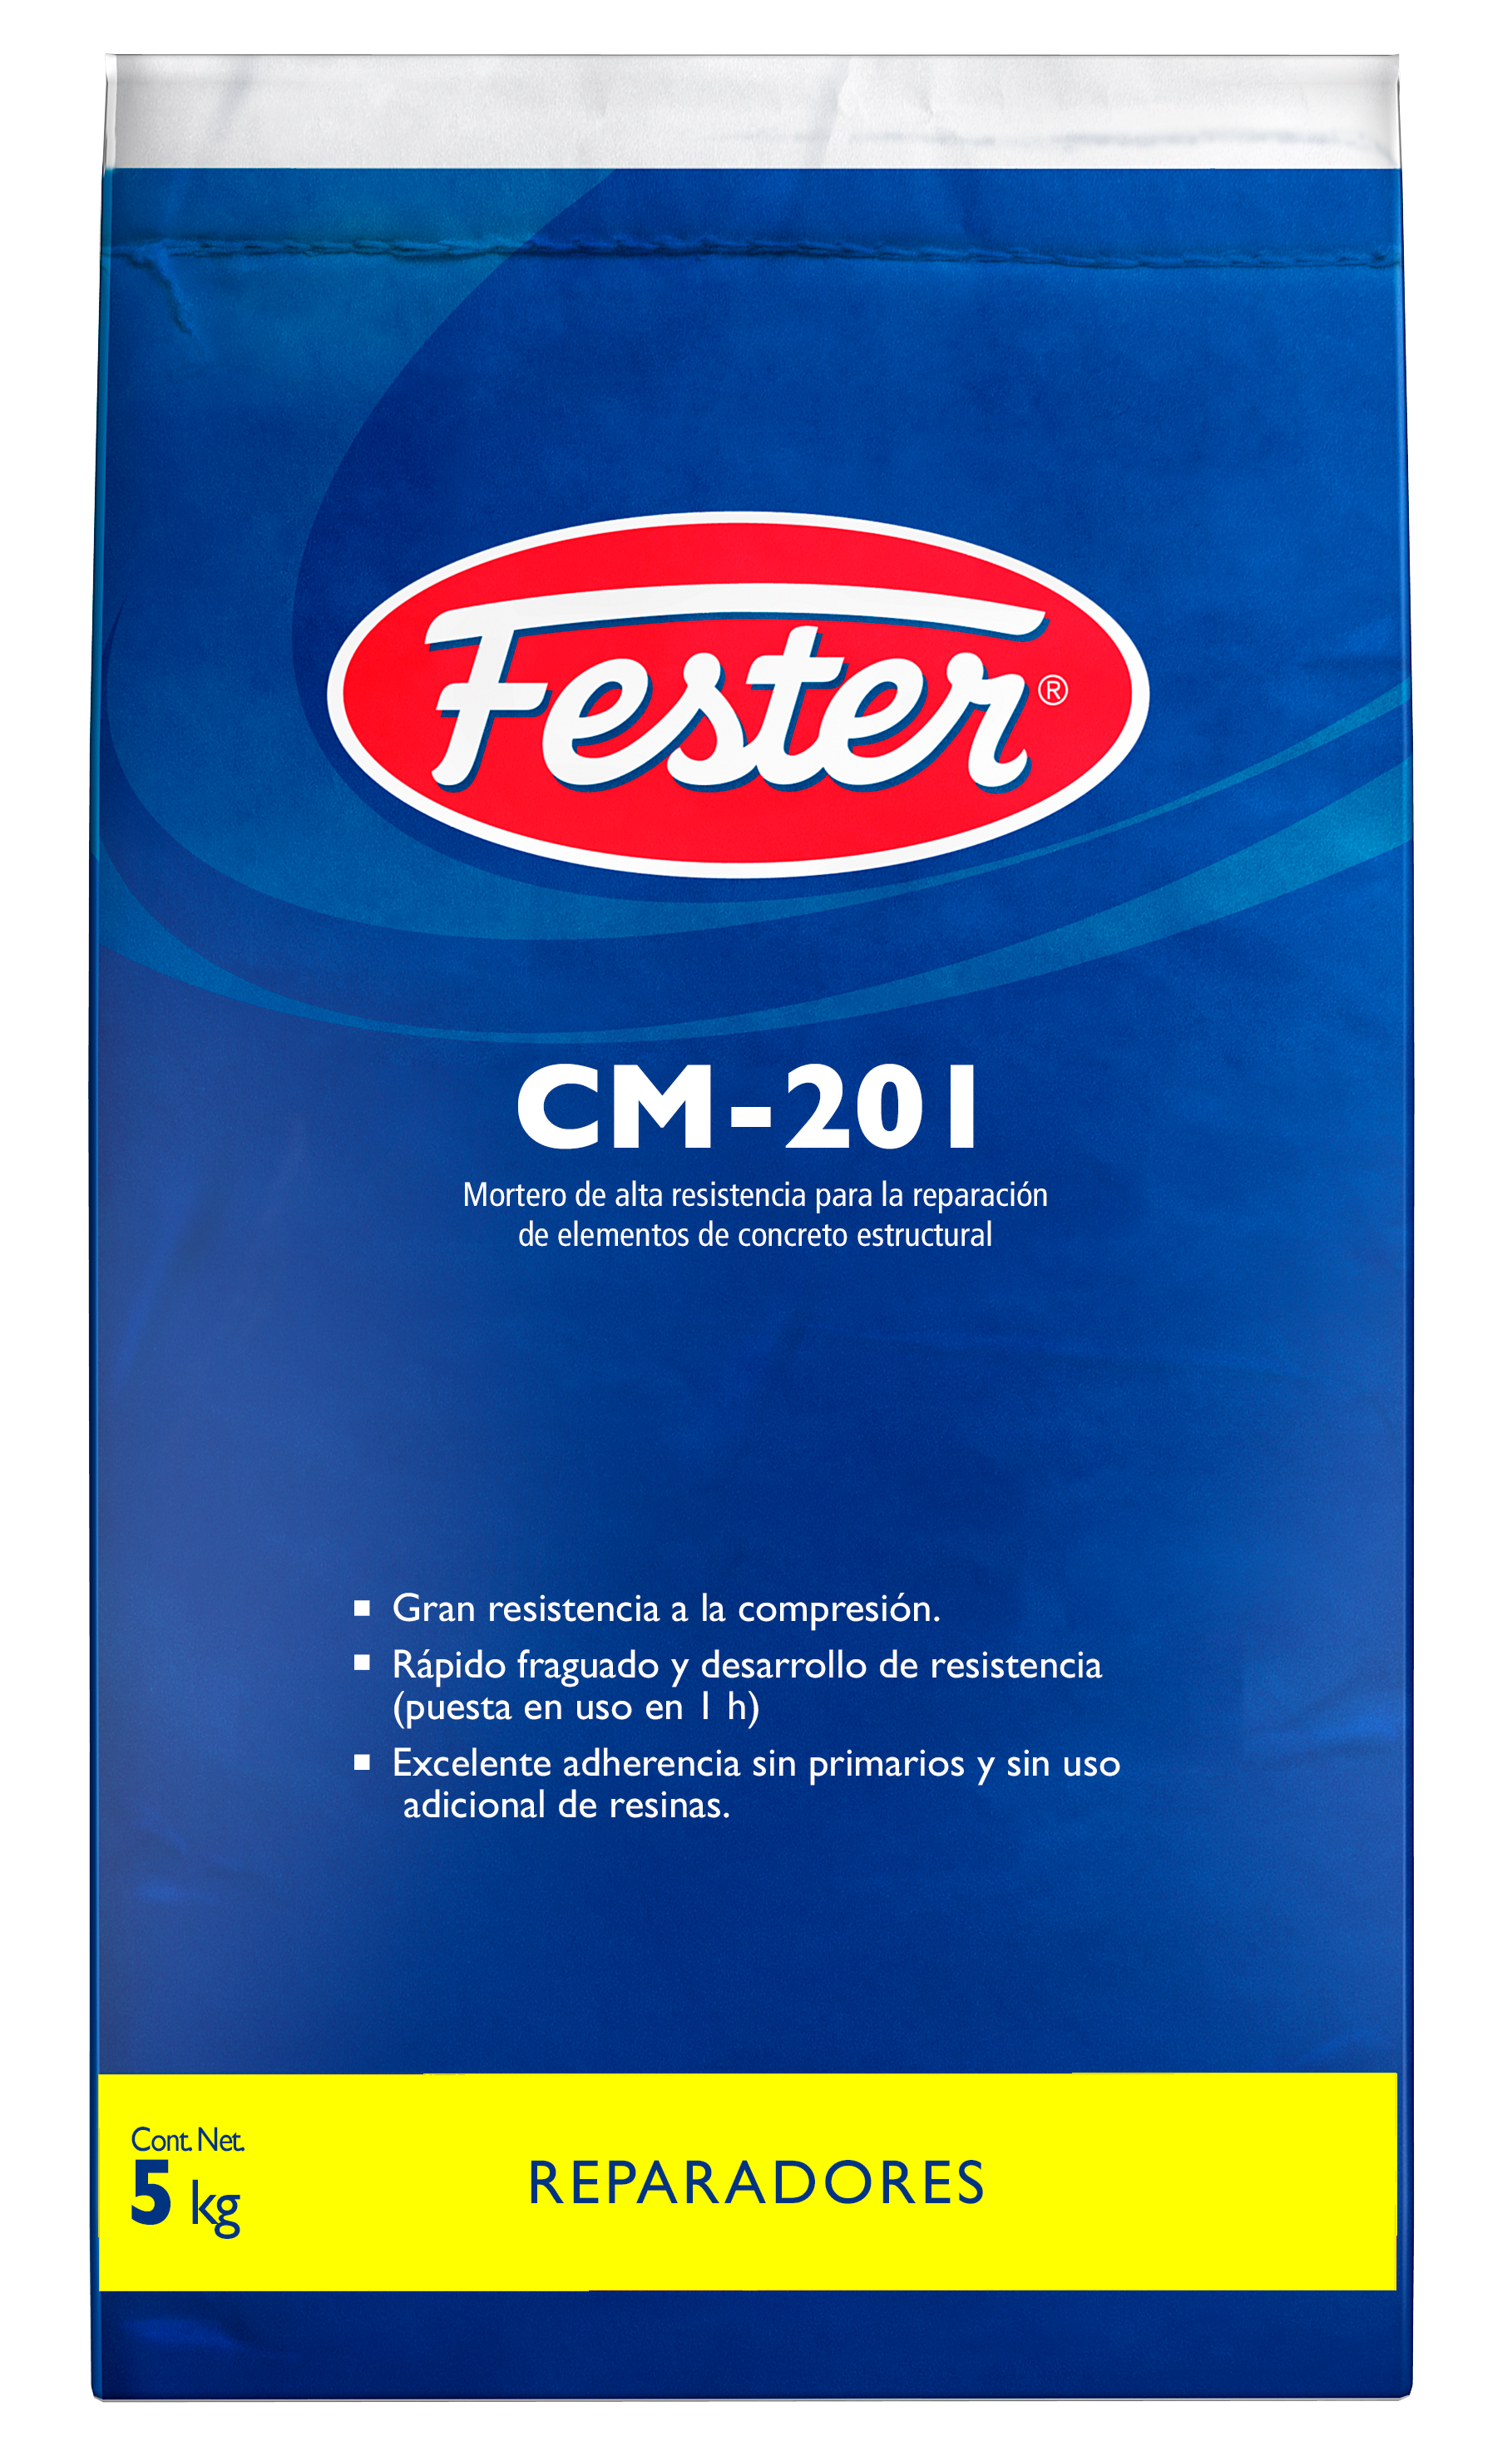 Envase de Fester CM201 mortero reparador. Aplicación de Fester CM201 en superficie de concreto. Superficie reparada con Fester CM201. Detalle del mortero reparador Fester CM201. Restauración de concreto con Fester CM201.